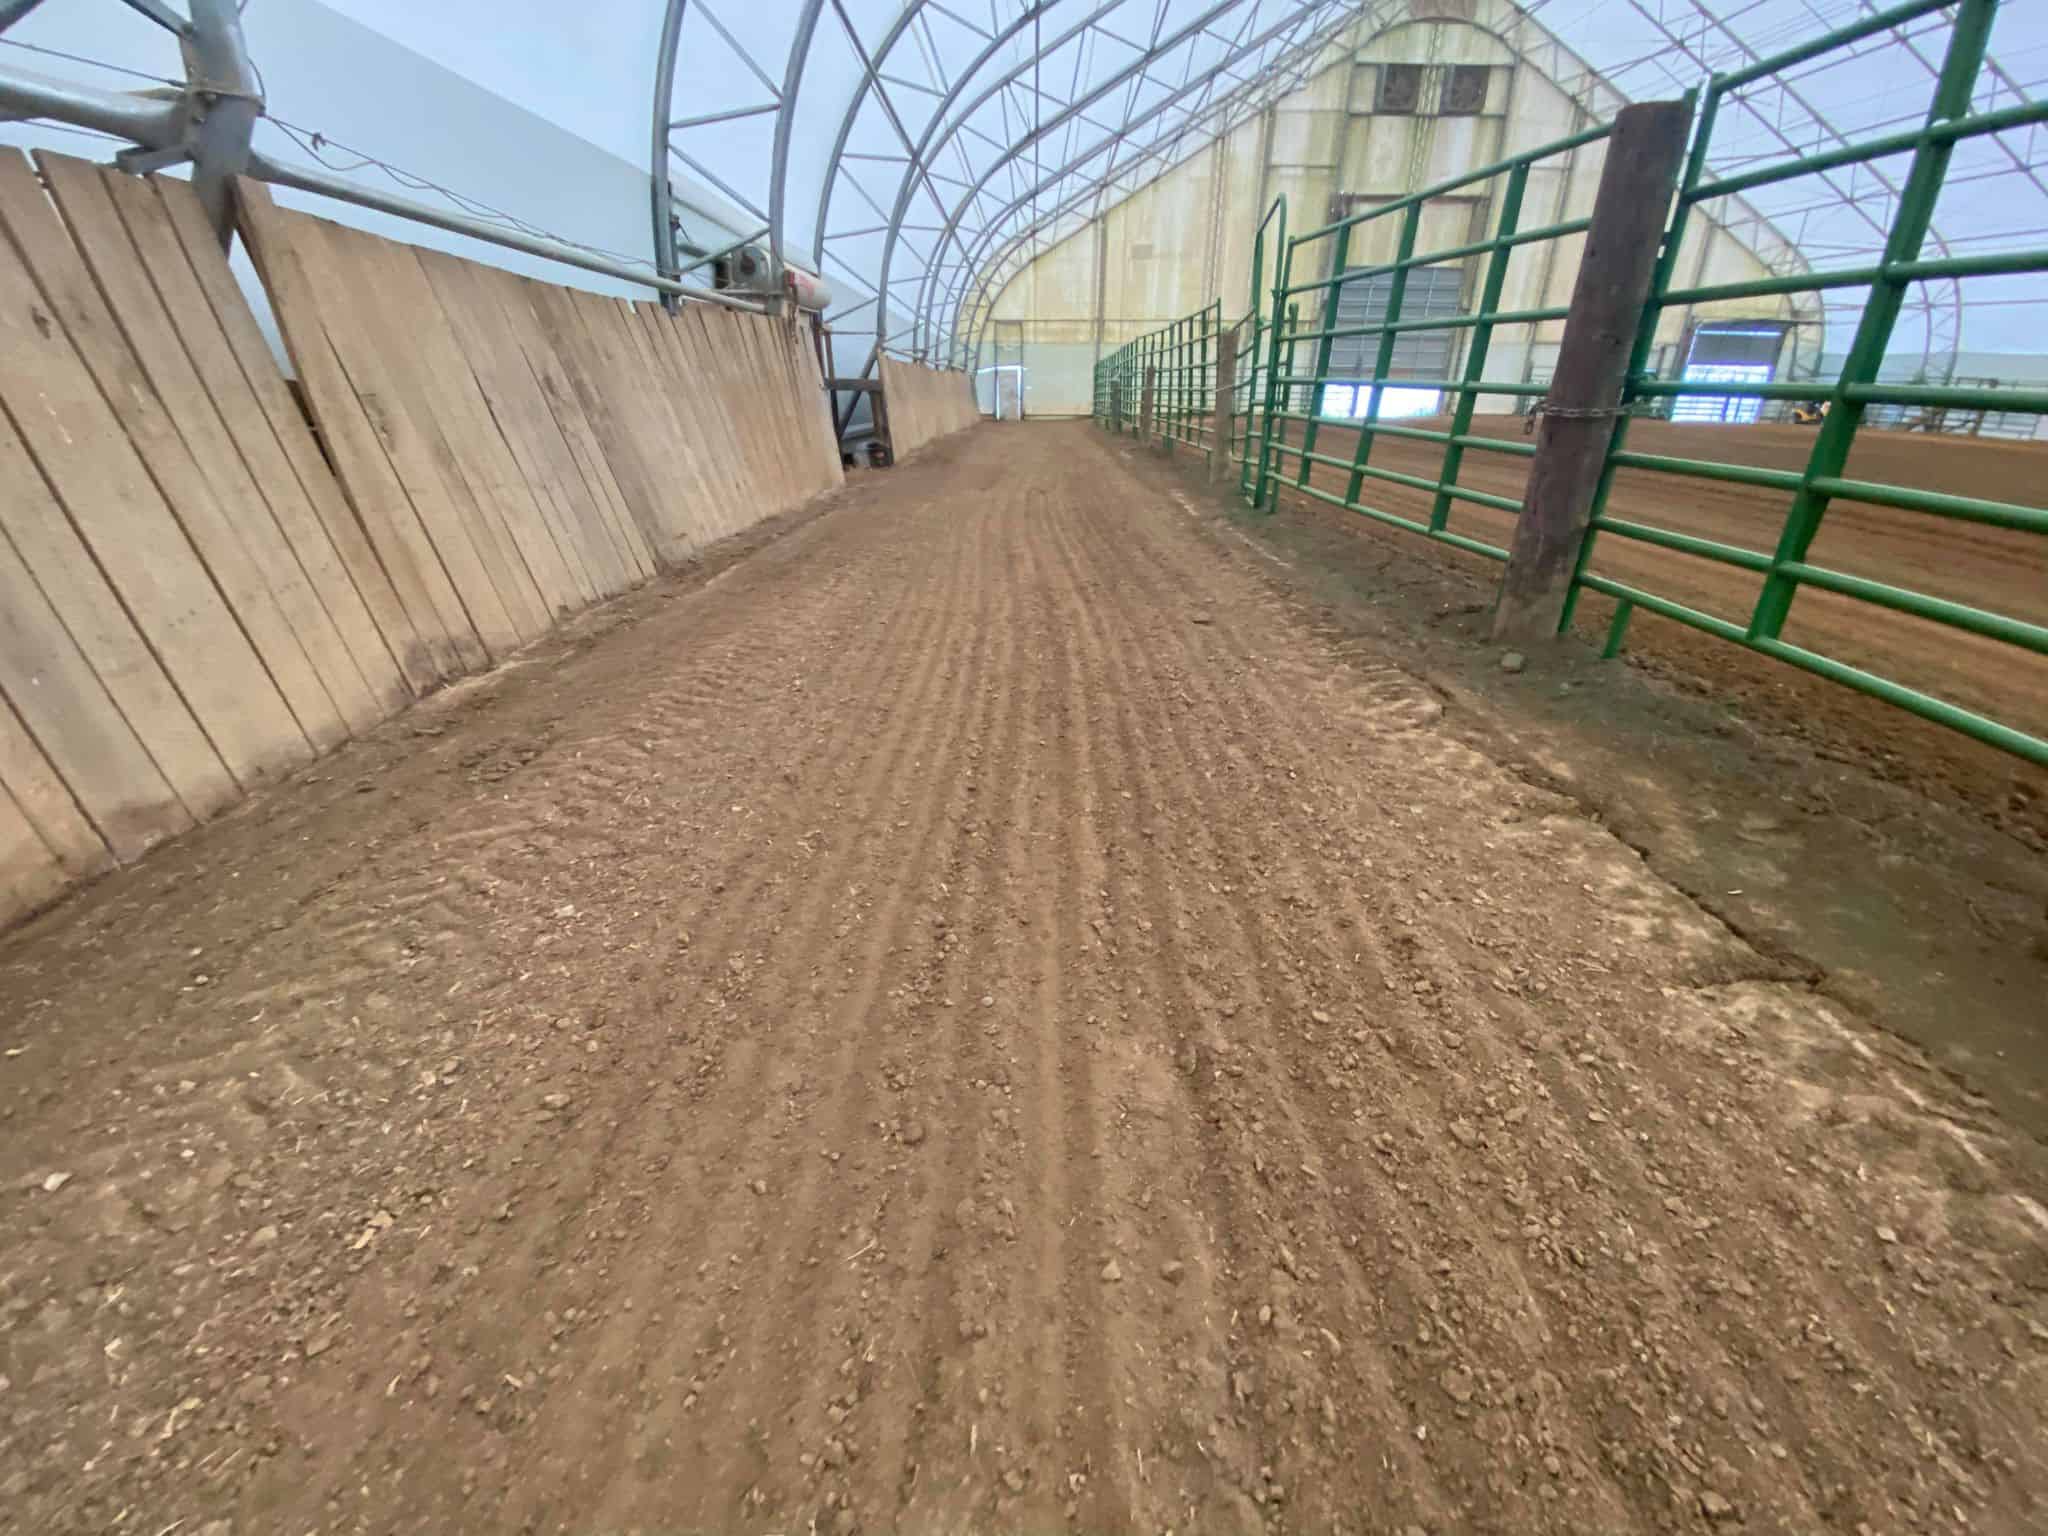 inside dirt arena